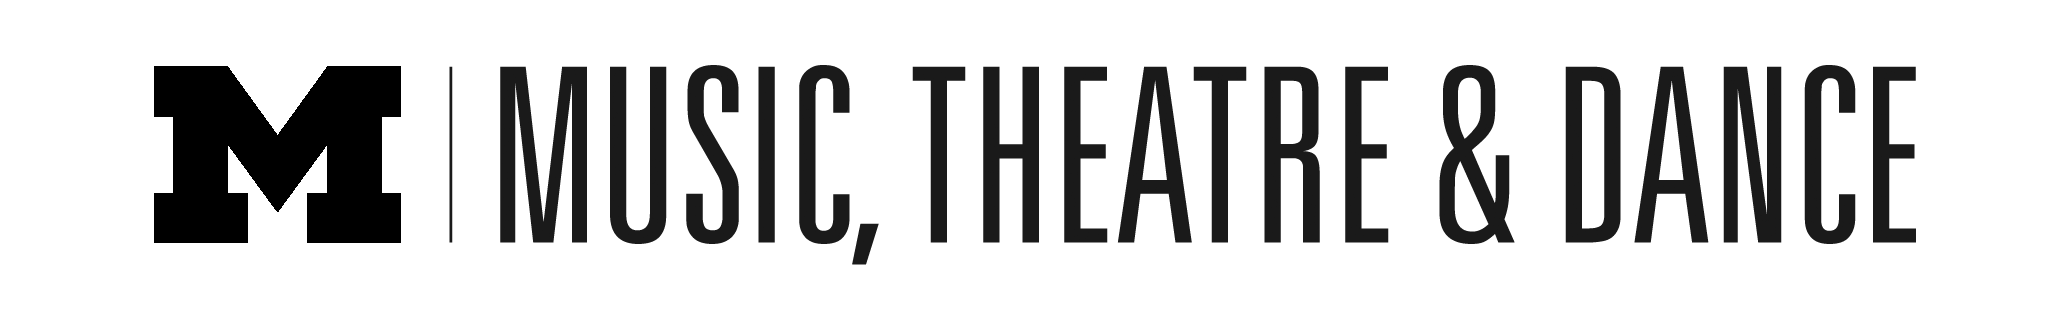 U of M Music, Theatre & Dance logo